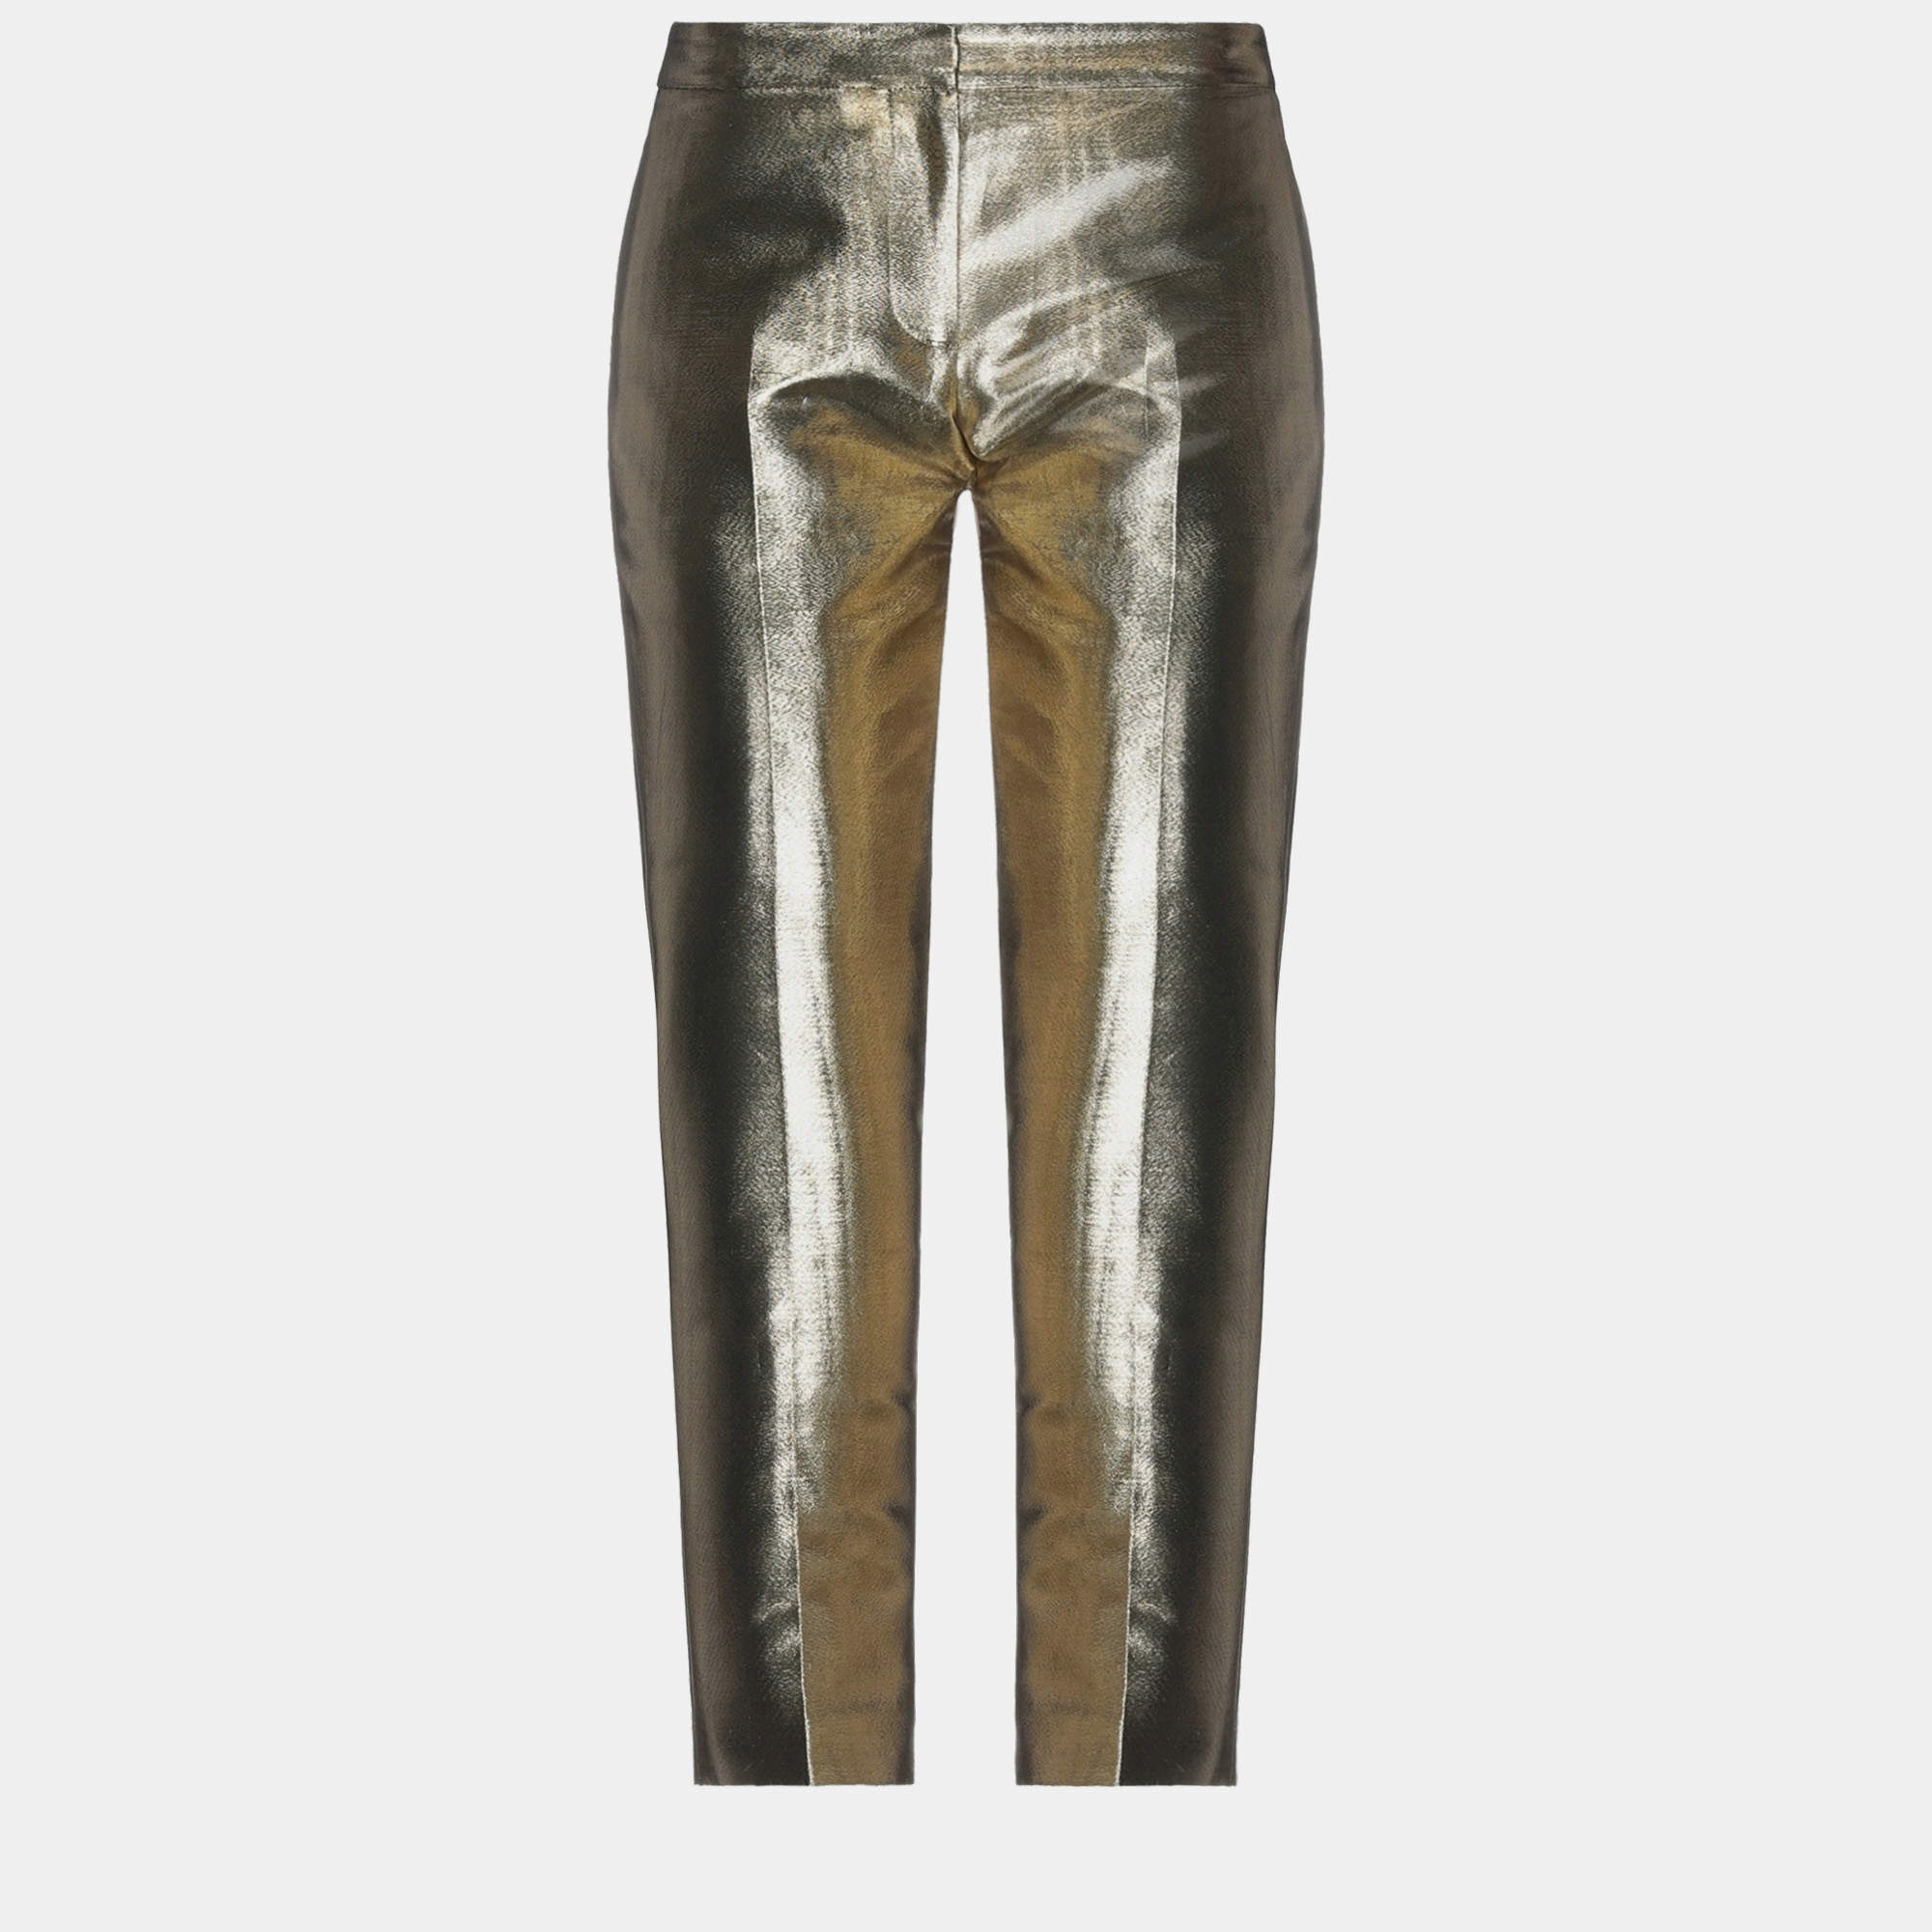 Alexander McQueen Metallic Moire Cigarette Pants Size 38